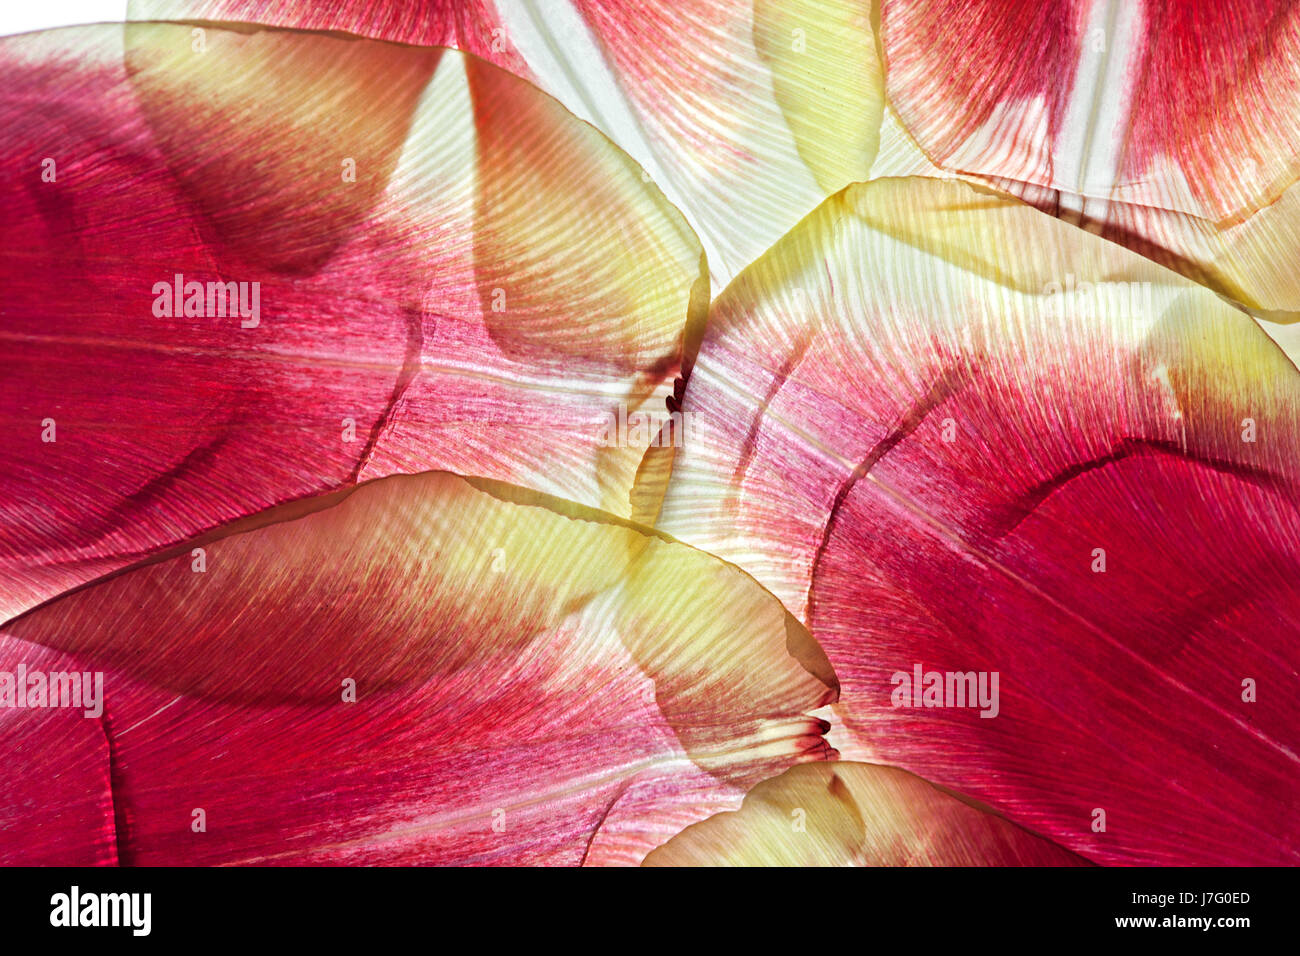 bloom blossom flourish flourishing flower plant tulip petals petal page sheet Stock Photo